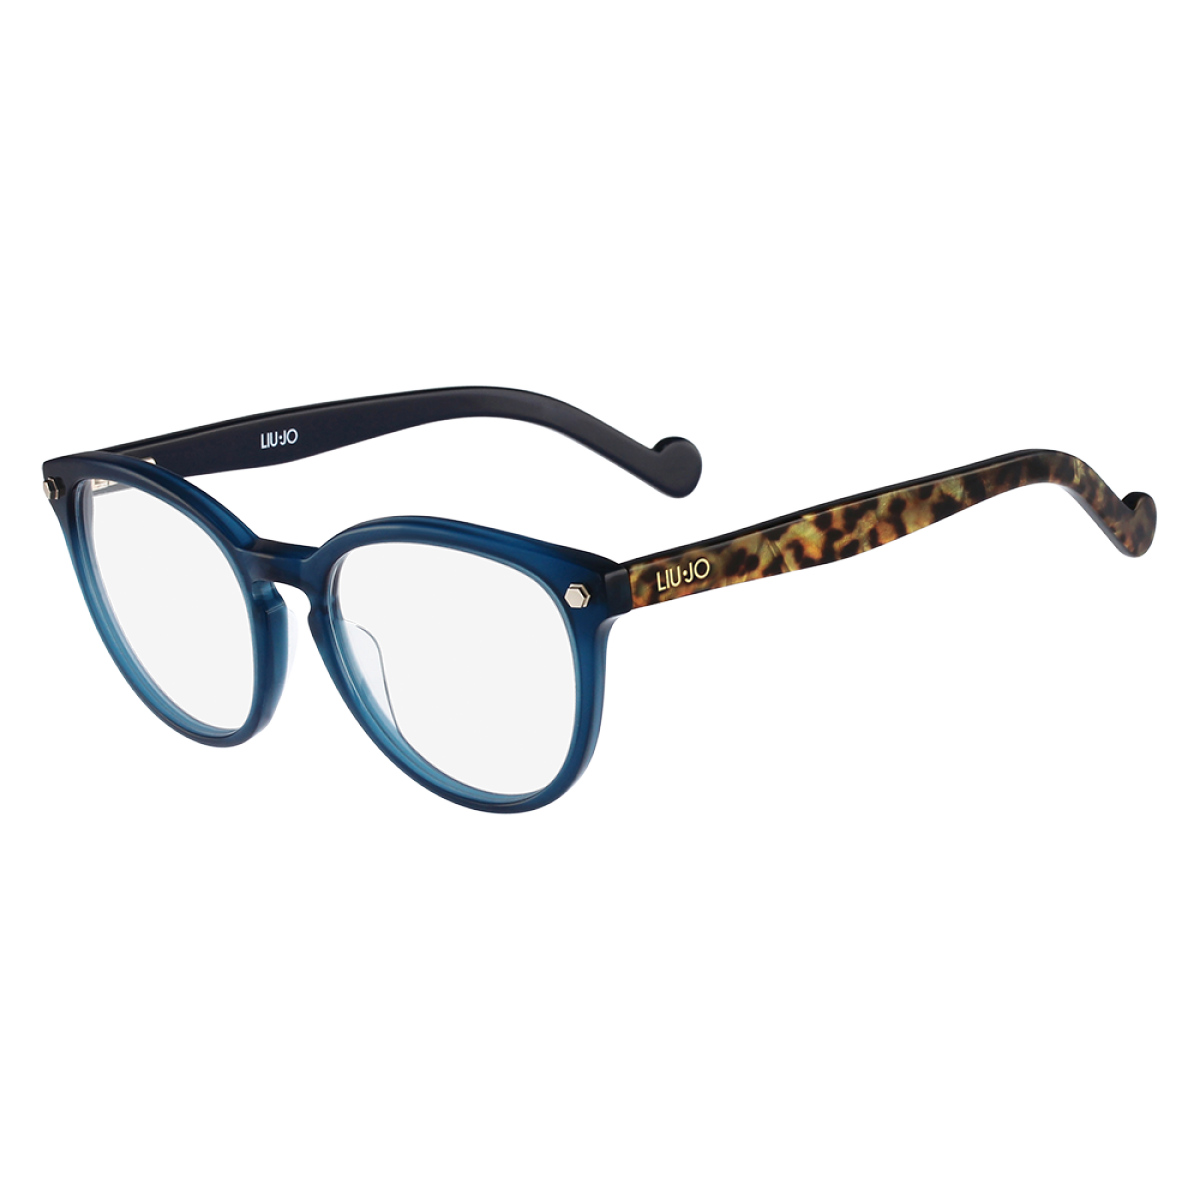 Eyeglasses Sunglasses Ray-Ban Eyewear Lj2607 Liu Jo Clipart